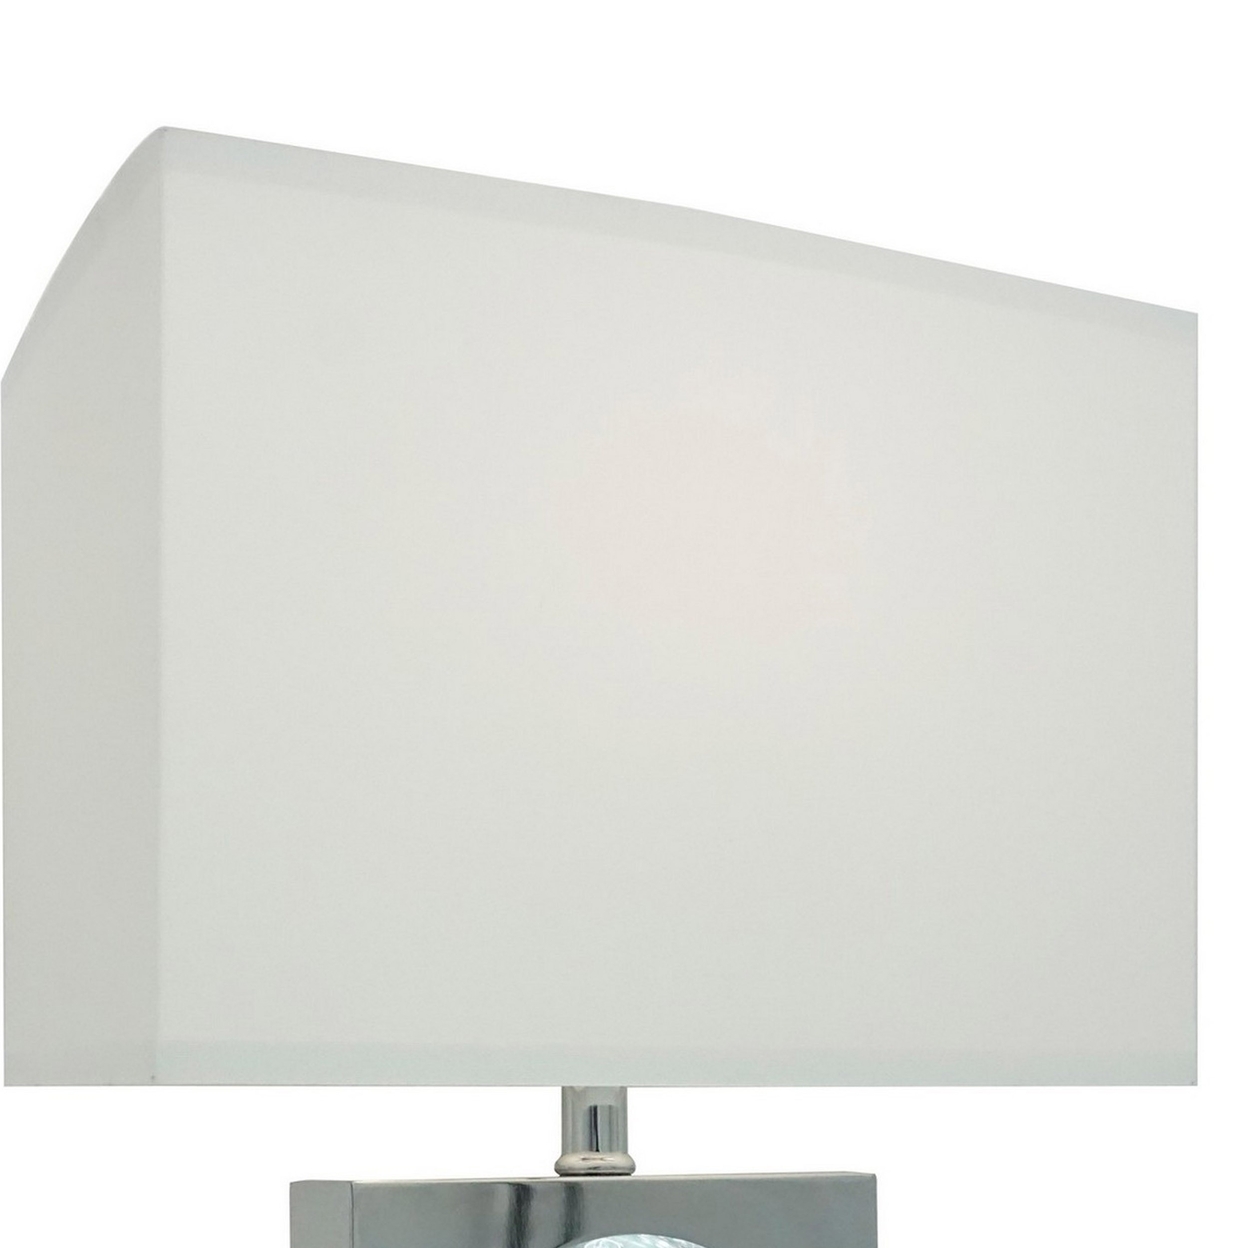 Rohi 22 Inch Table Lamp, White Fabric Shade, Chrome Base, LED Accents- Saltoro Sherpi